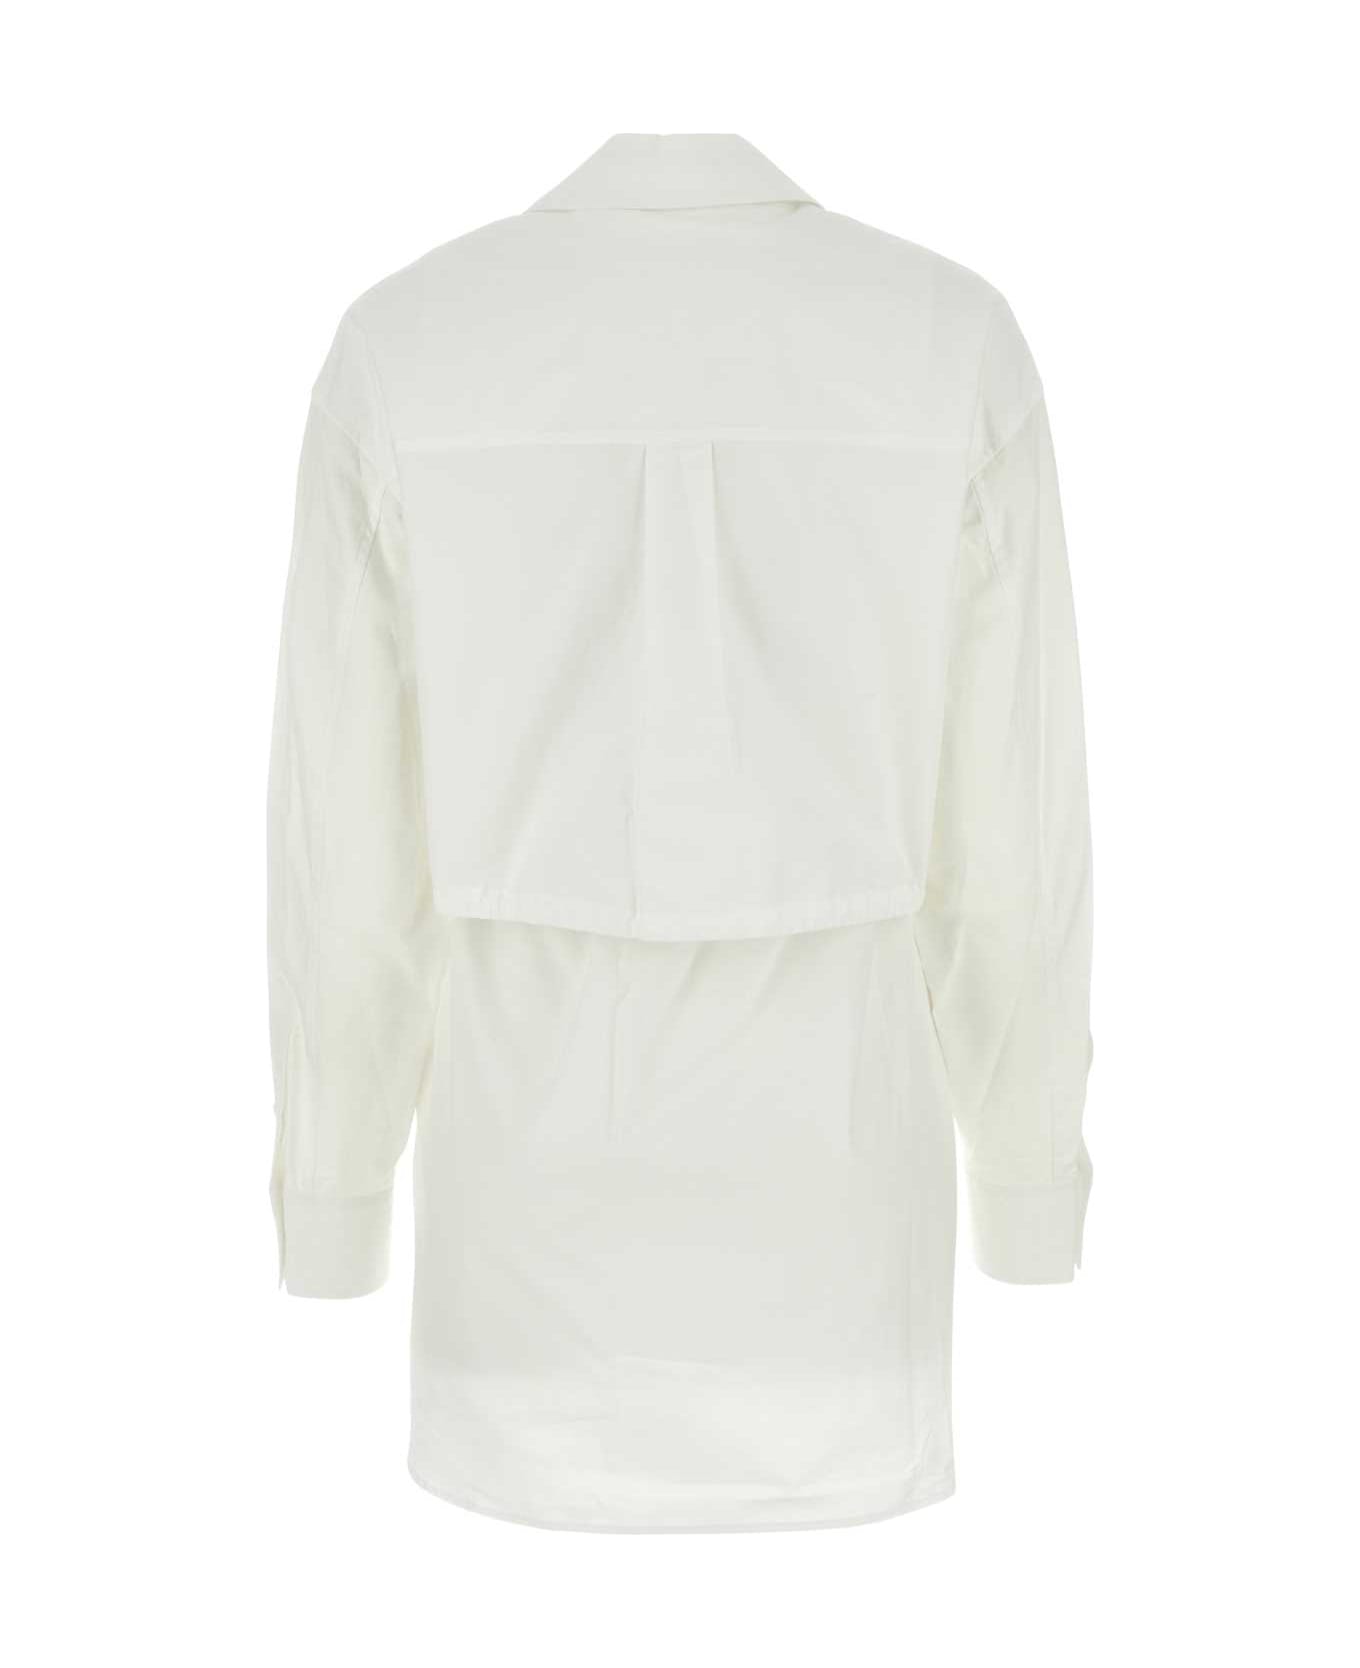 T by Alexander Wang White Poplin Shirt Dress - White シャツ